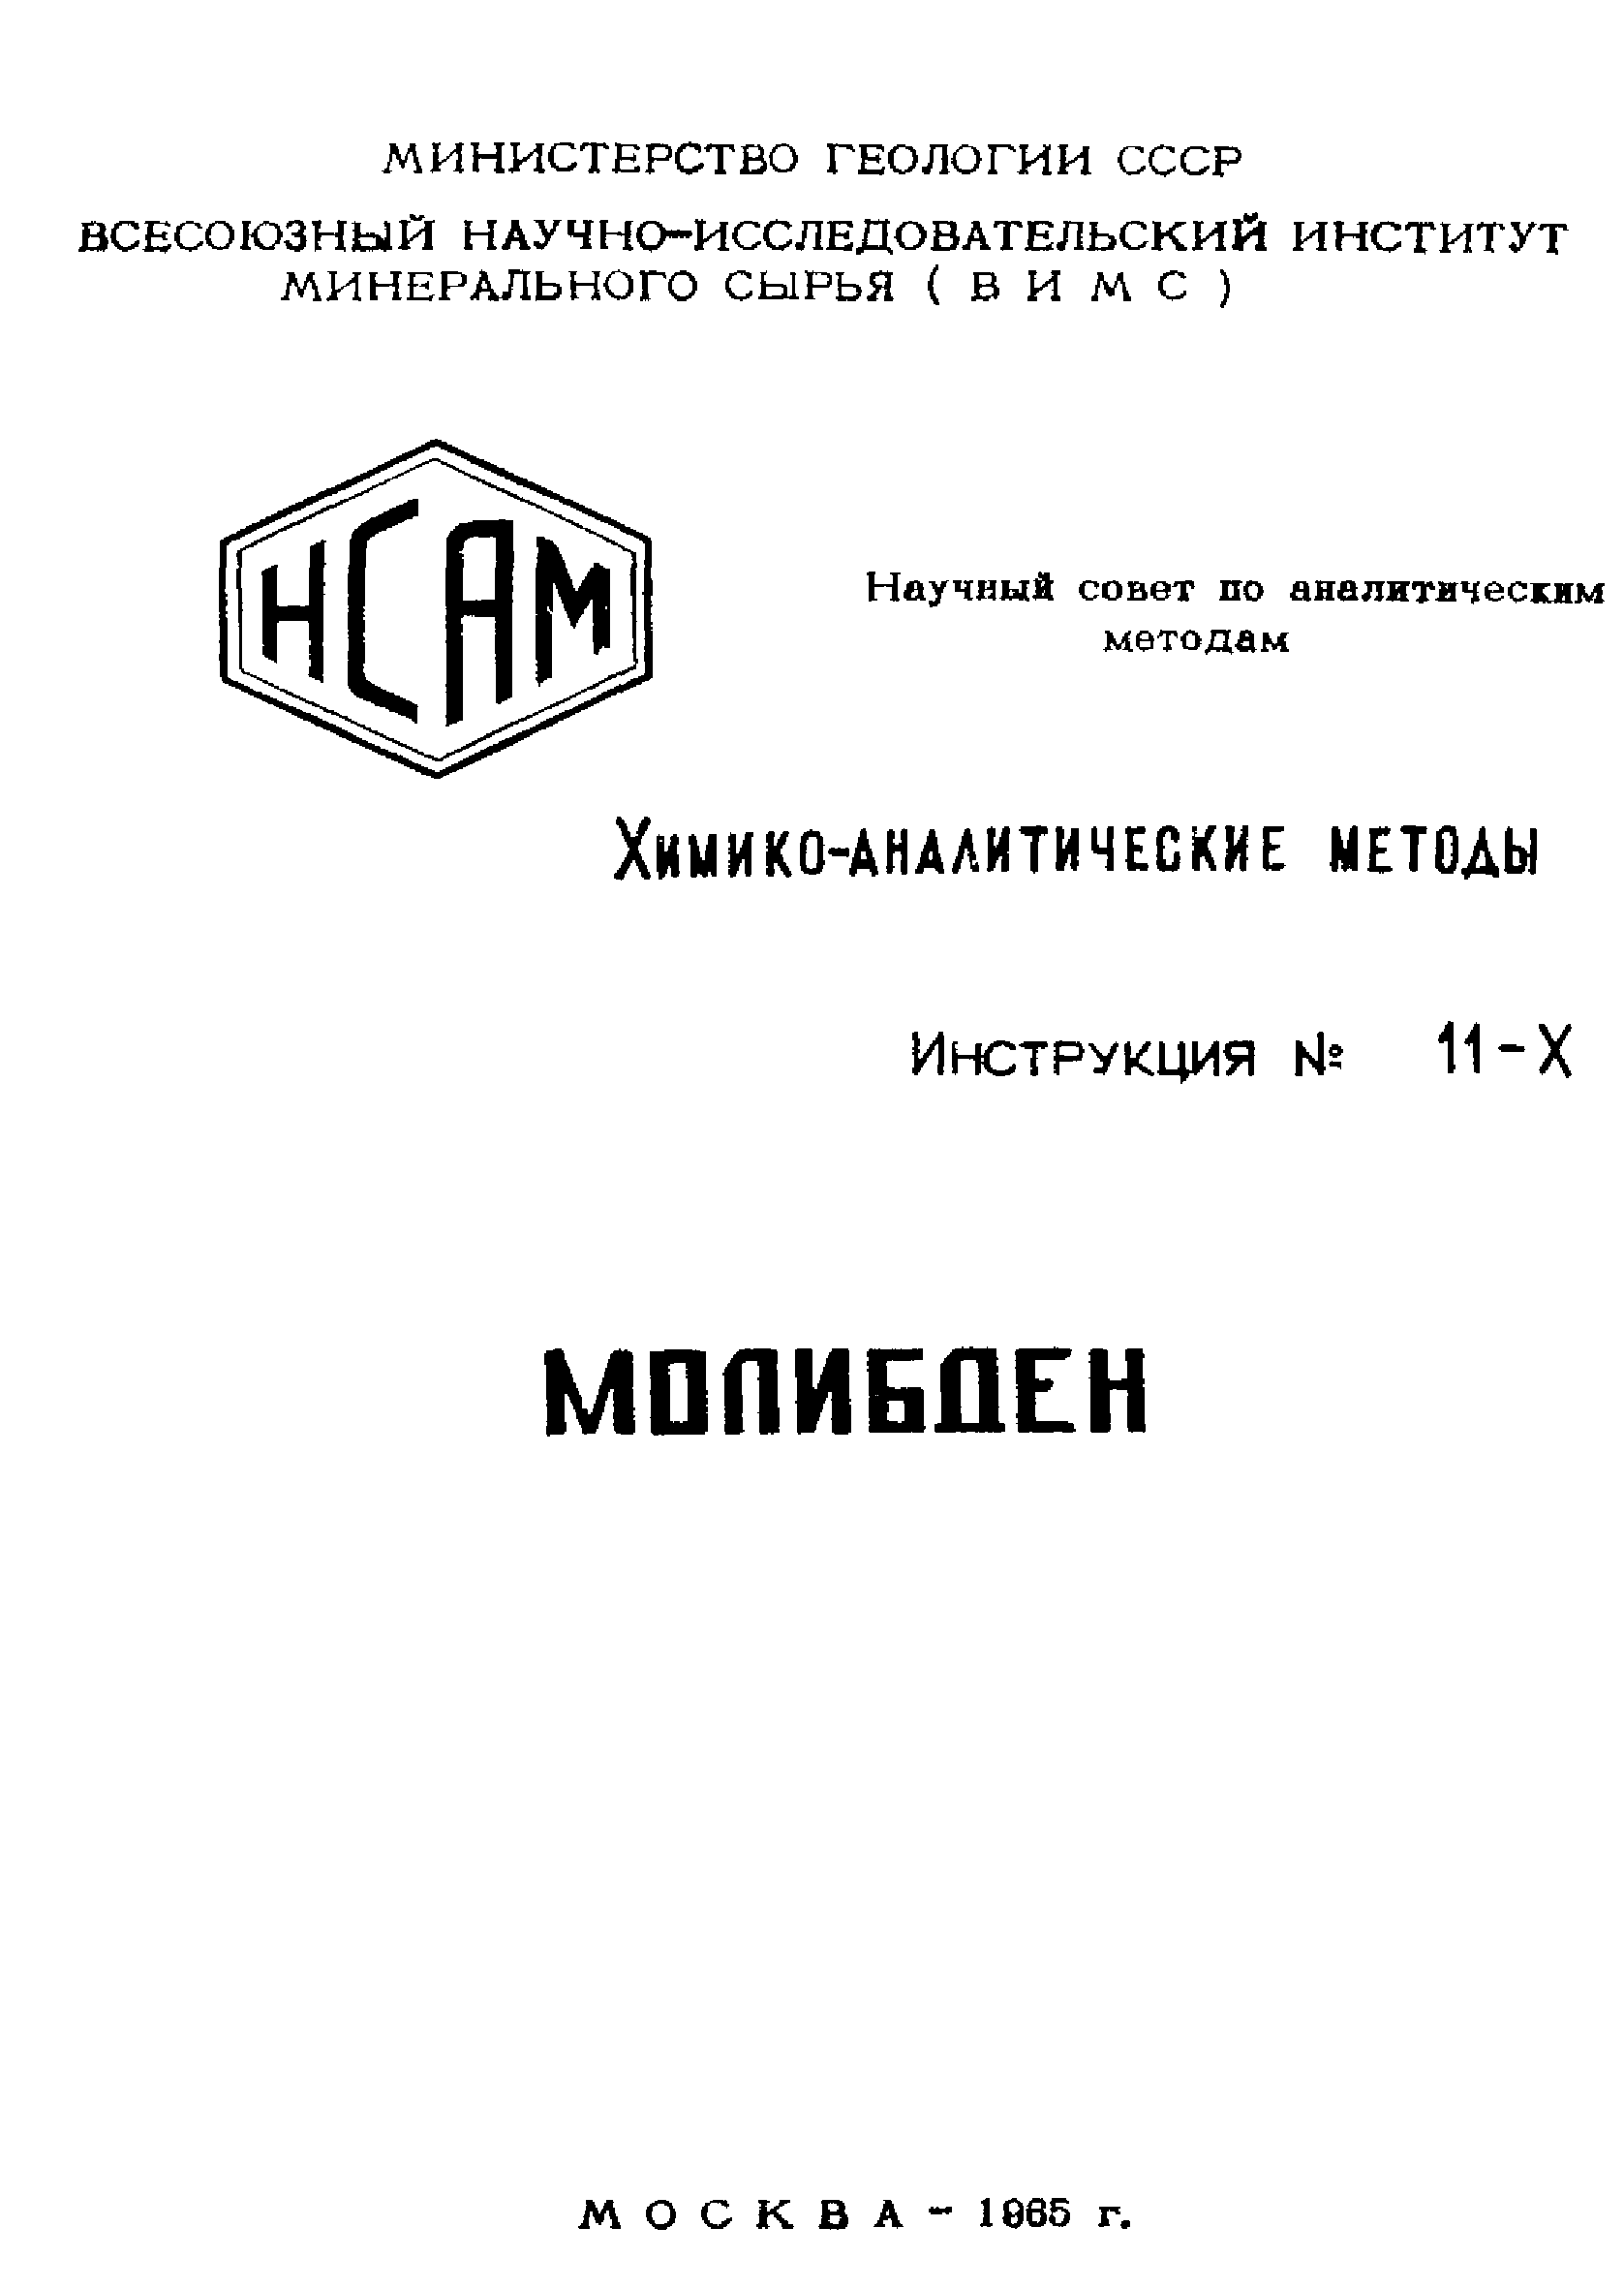 Инструкция НСАМ 11-Х